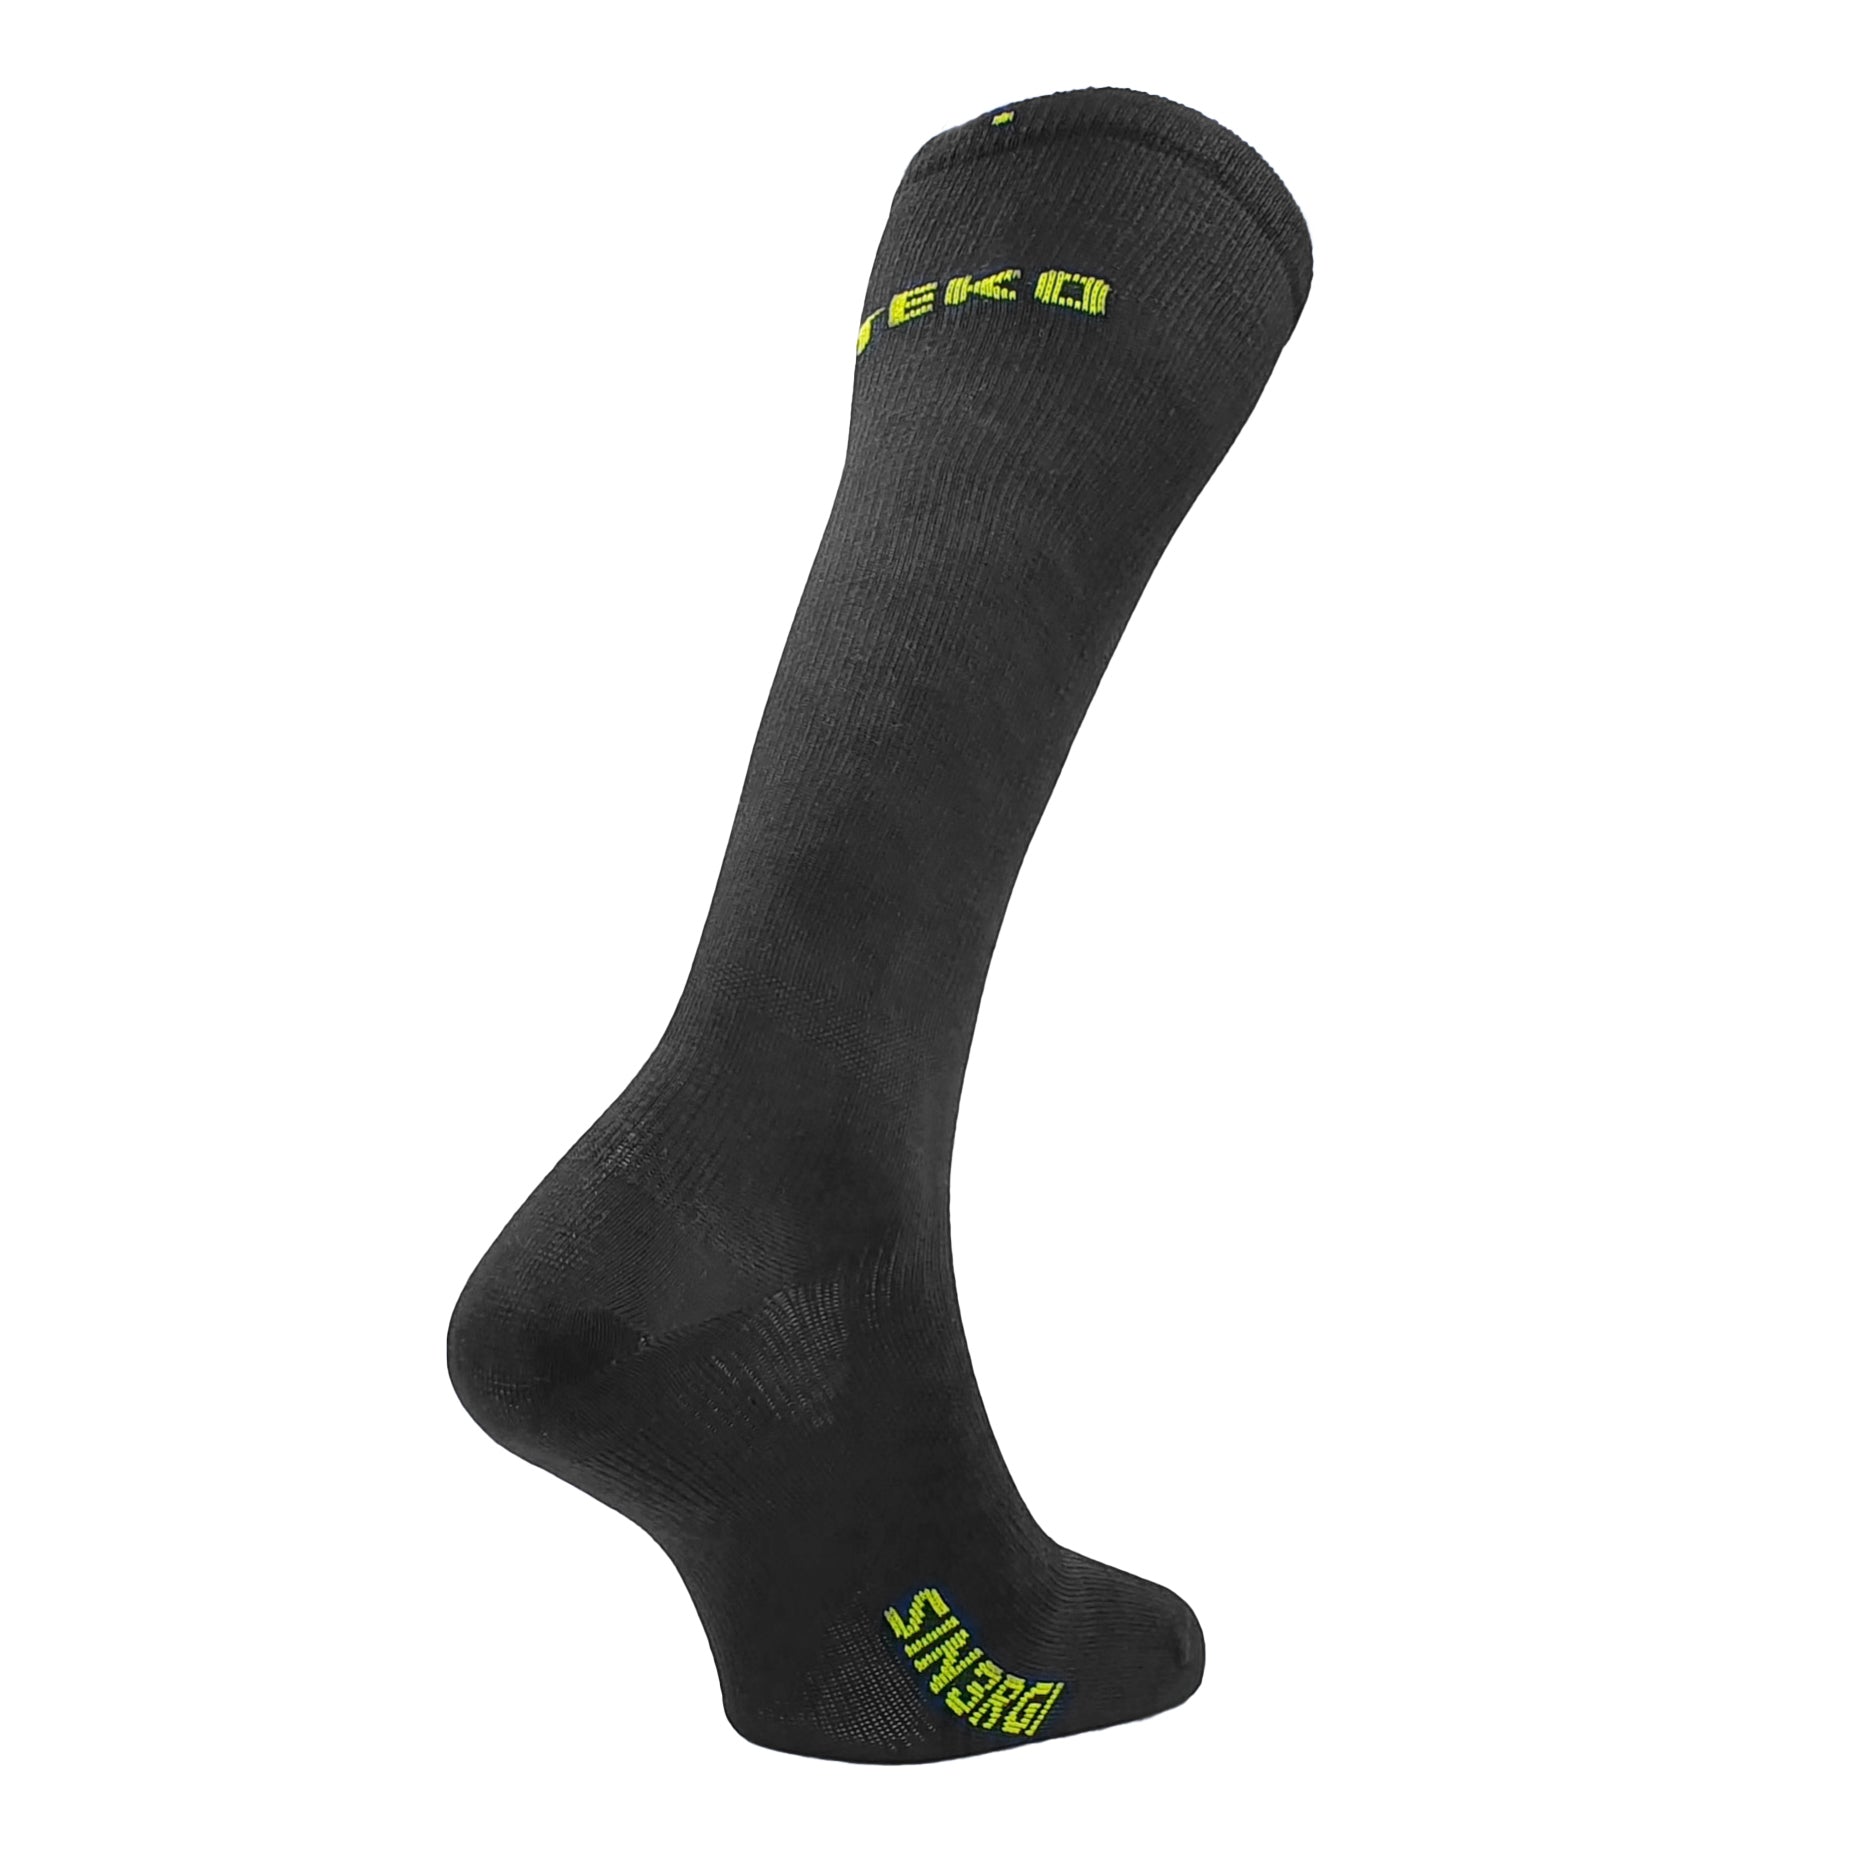 Hylaea Merino Wool Men's Ski Socks, 3-Pack